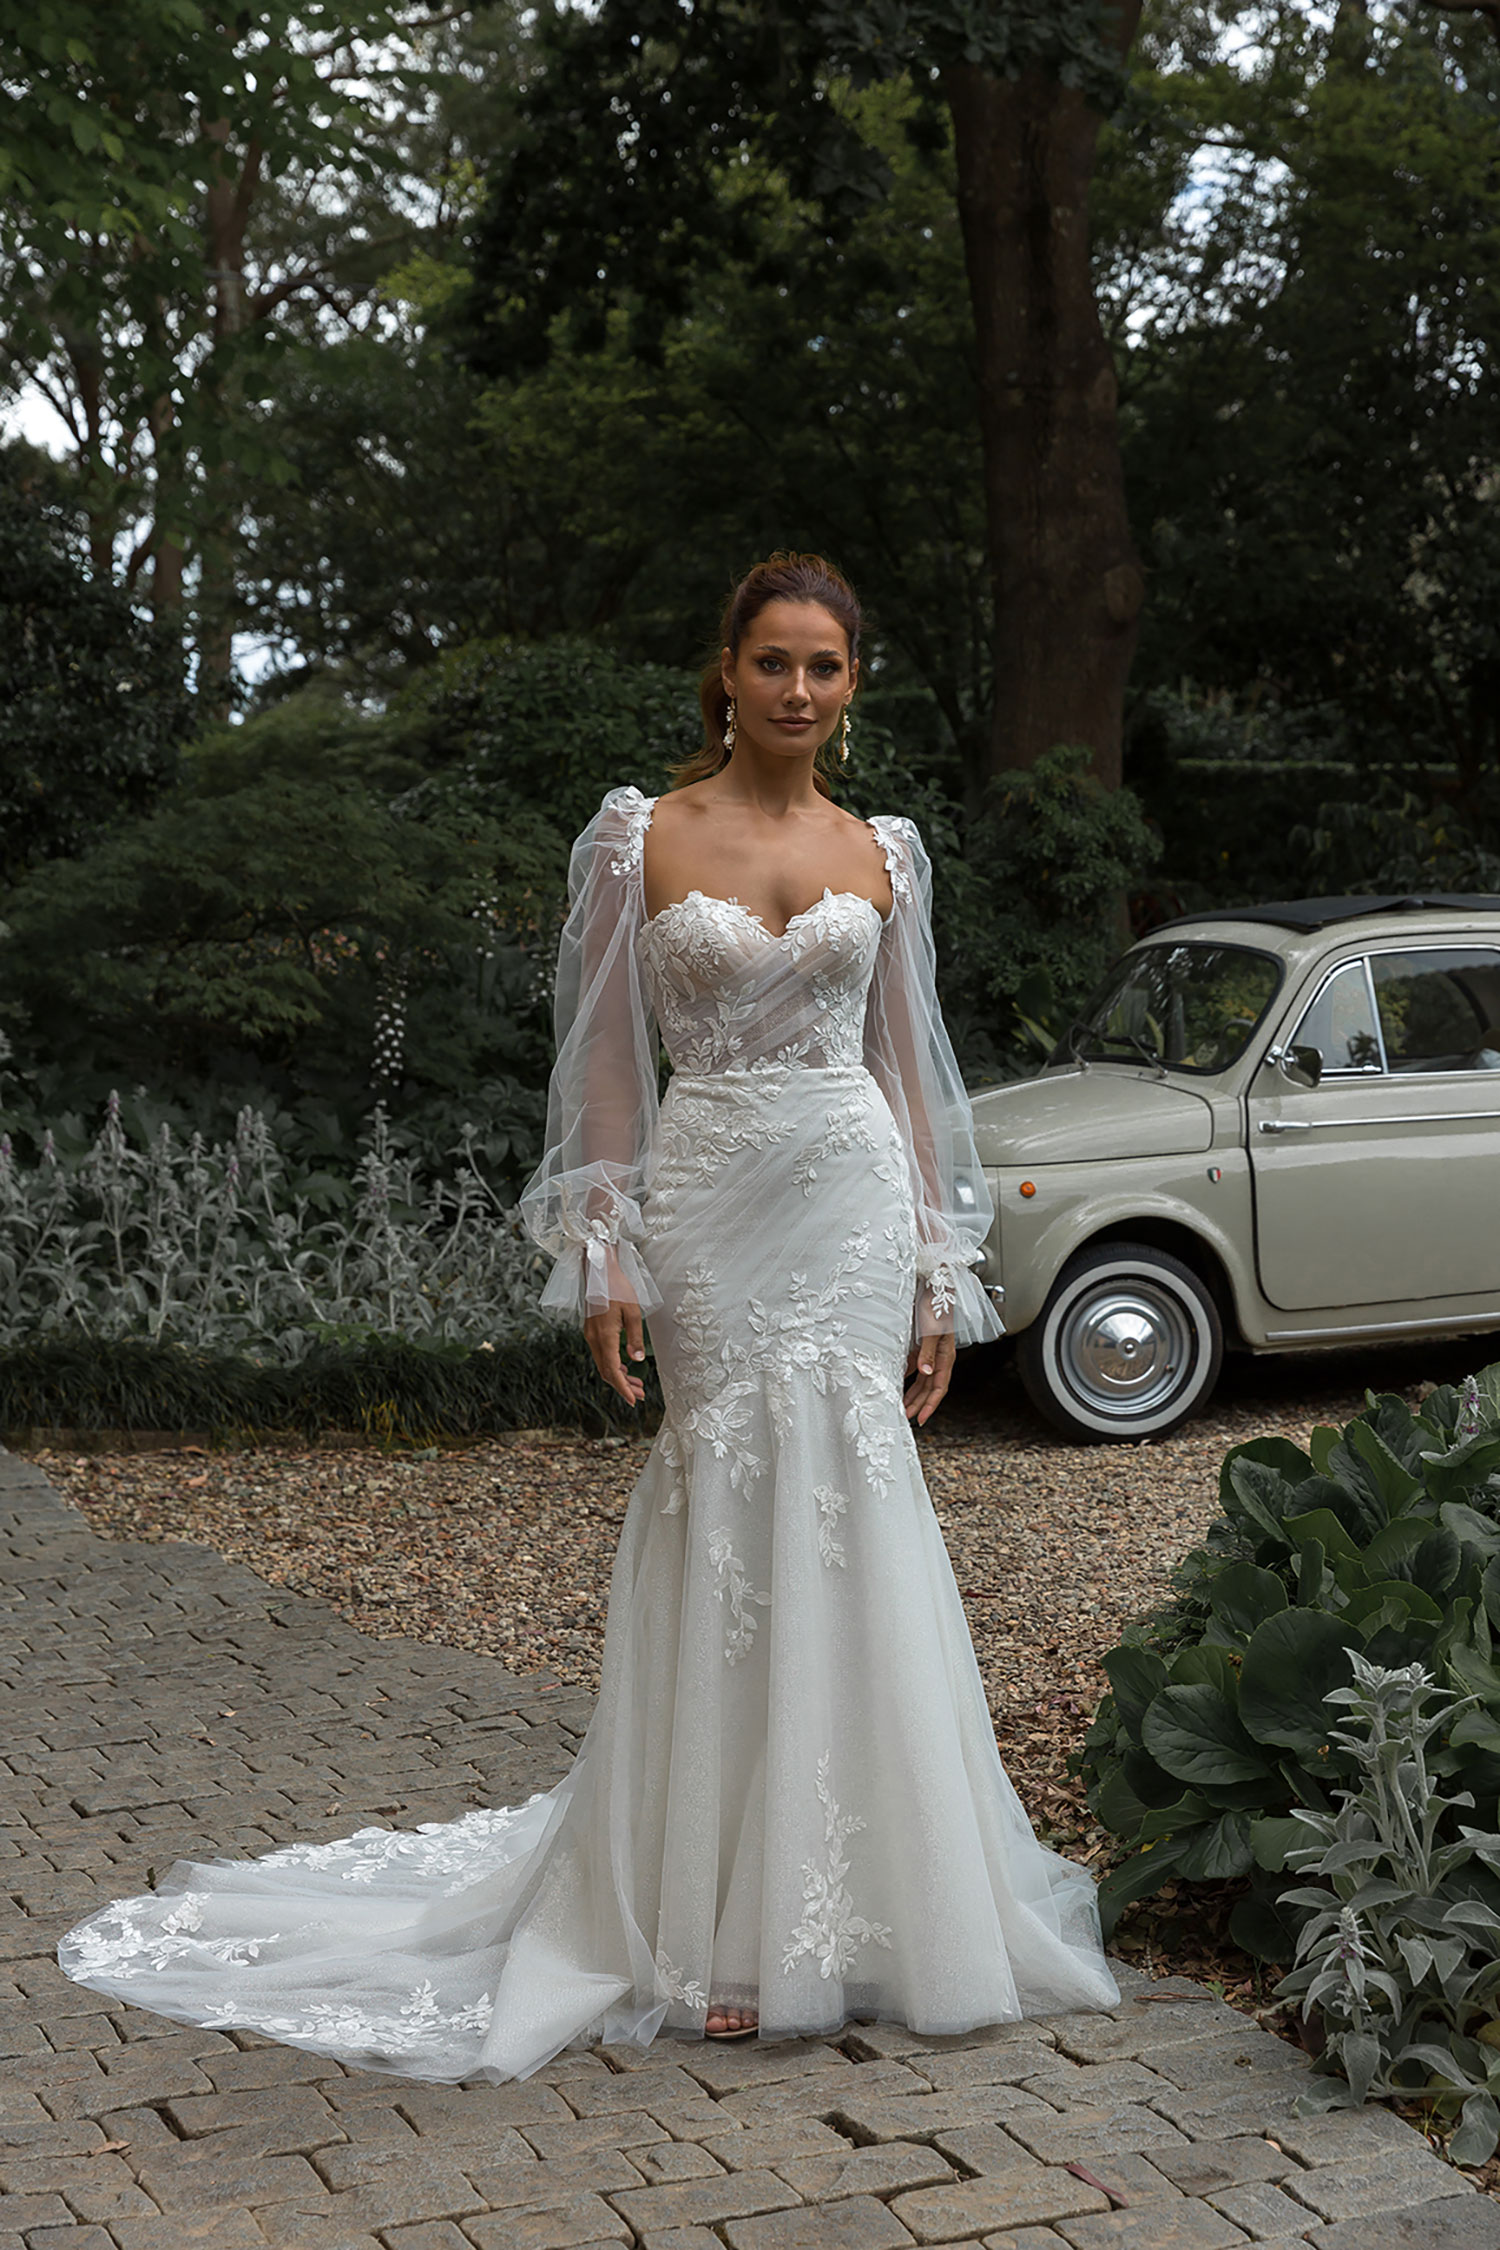 Pascale by Madi Lane deserves a solo shot 😉✨ #luvbridal #weddingtikto